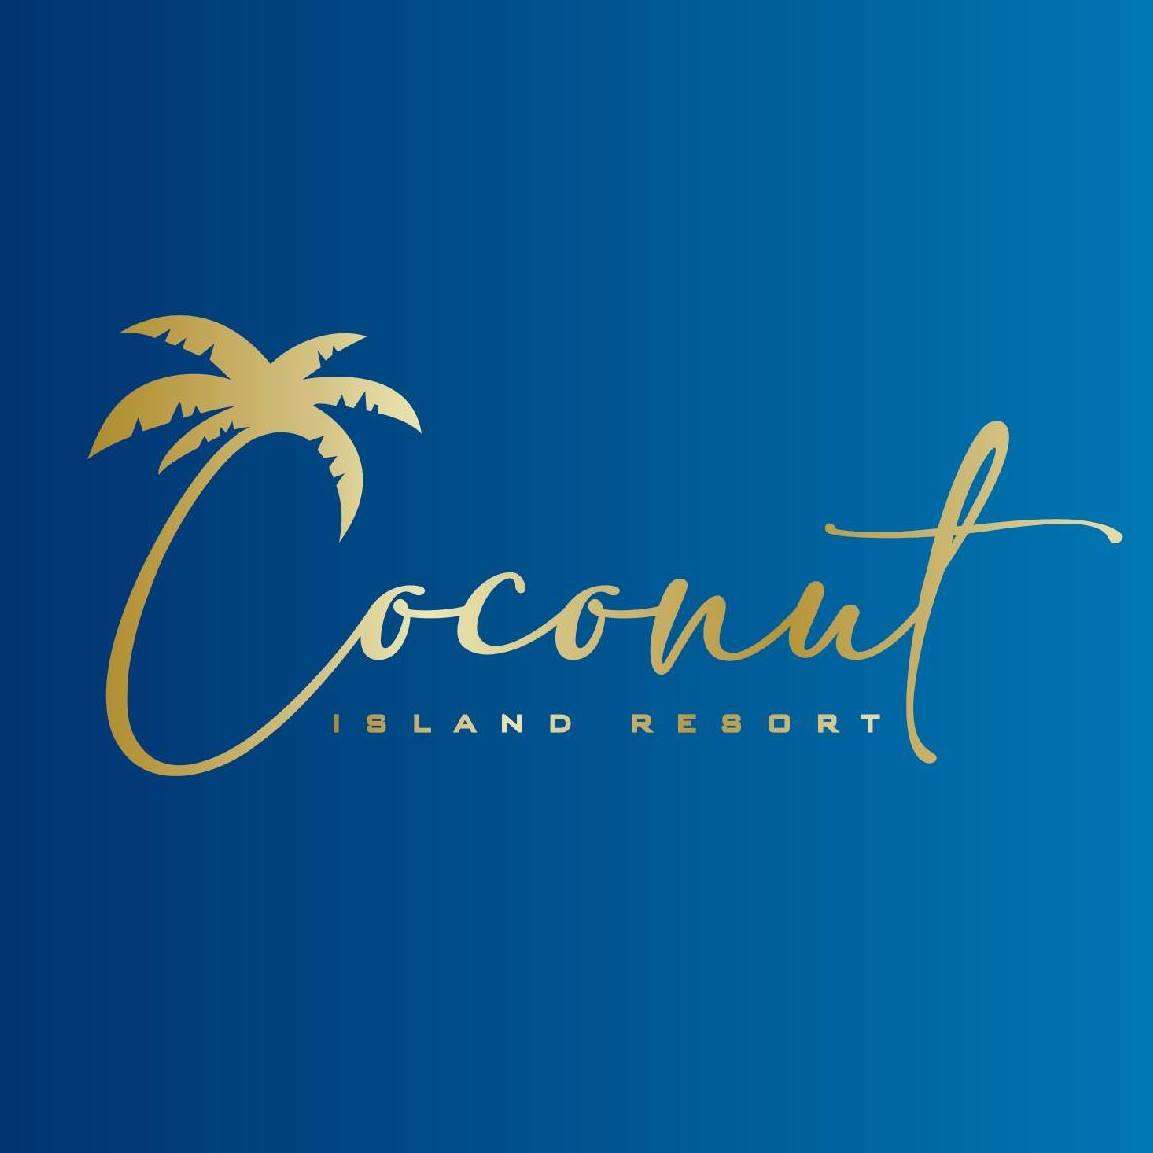 COCONUT ISLAND RESORT